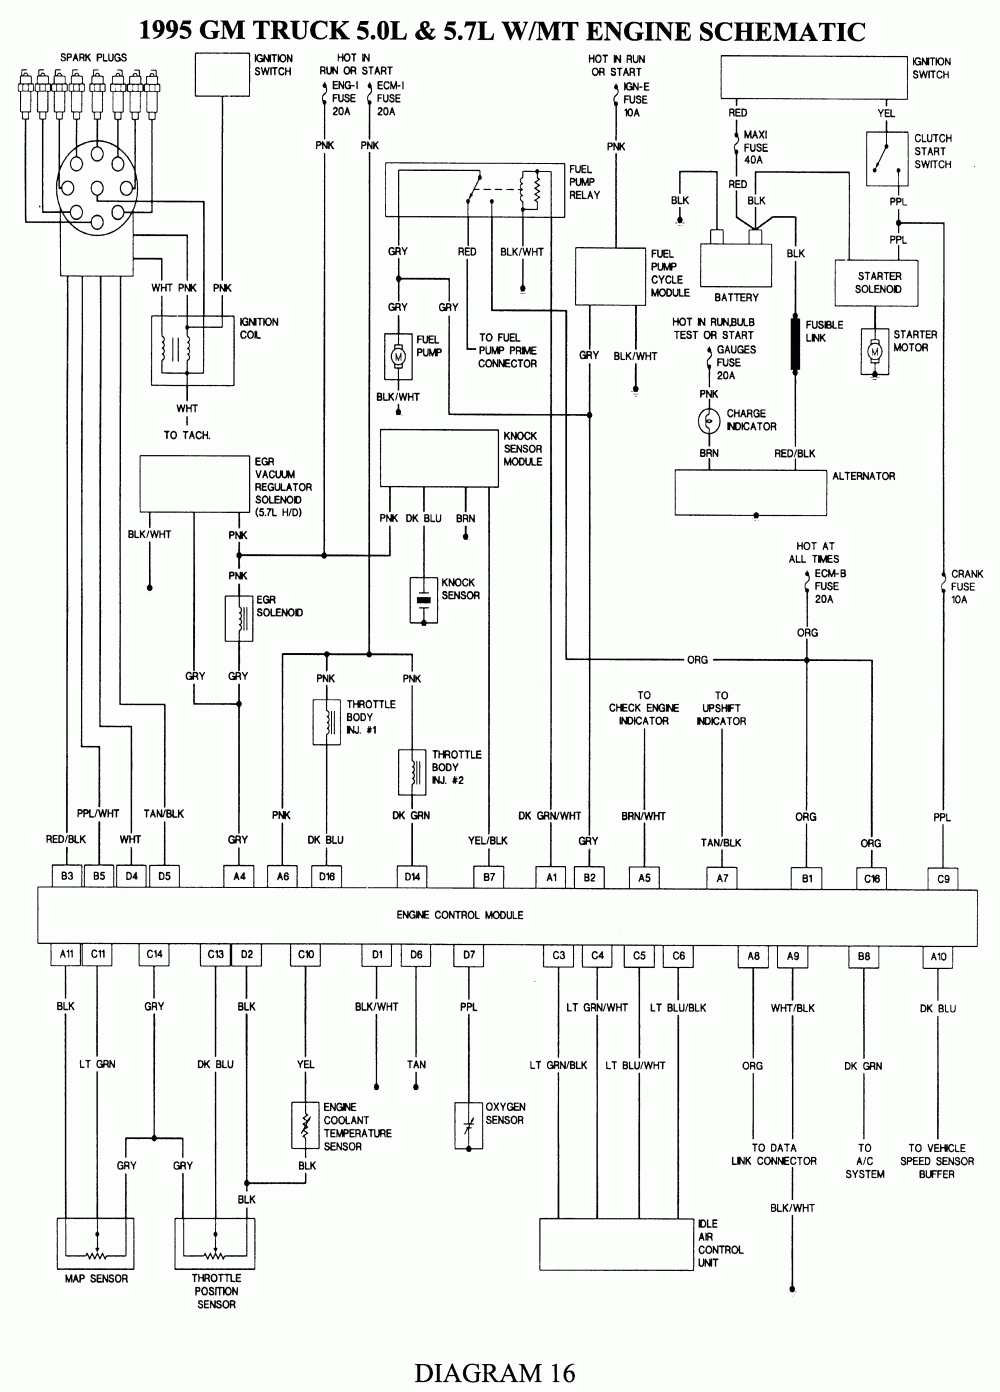 1989 Chevy Truck Wiring Diagram Cadician s Blog